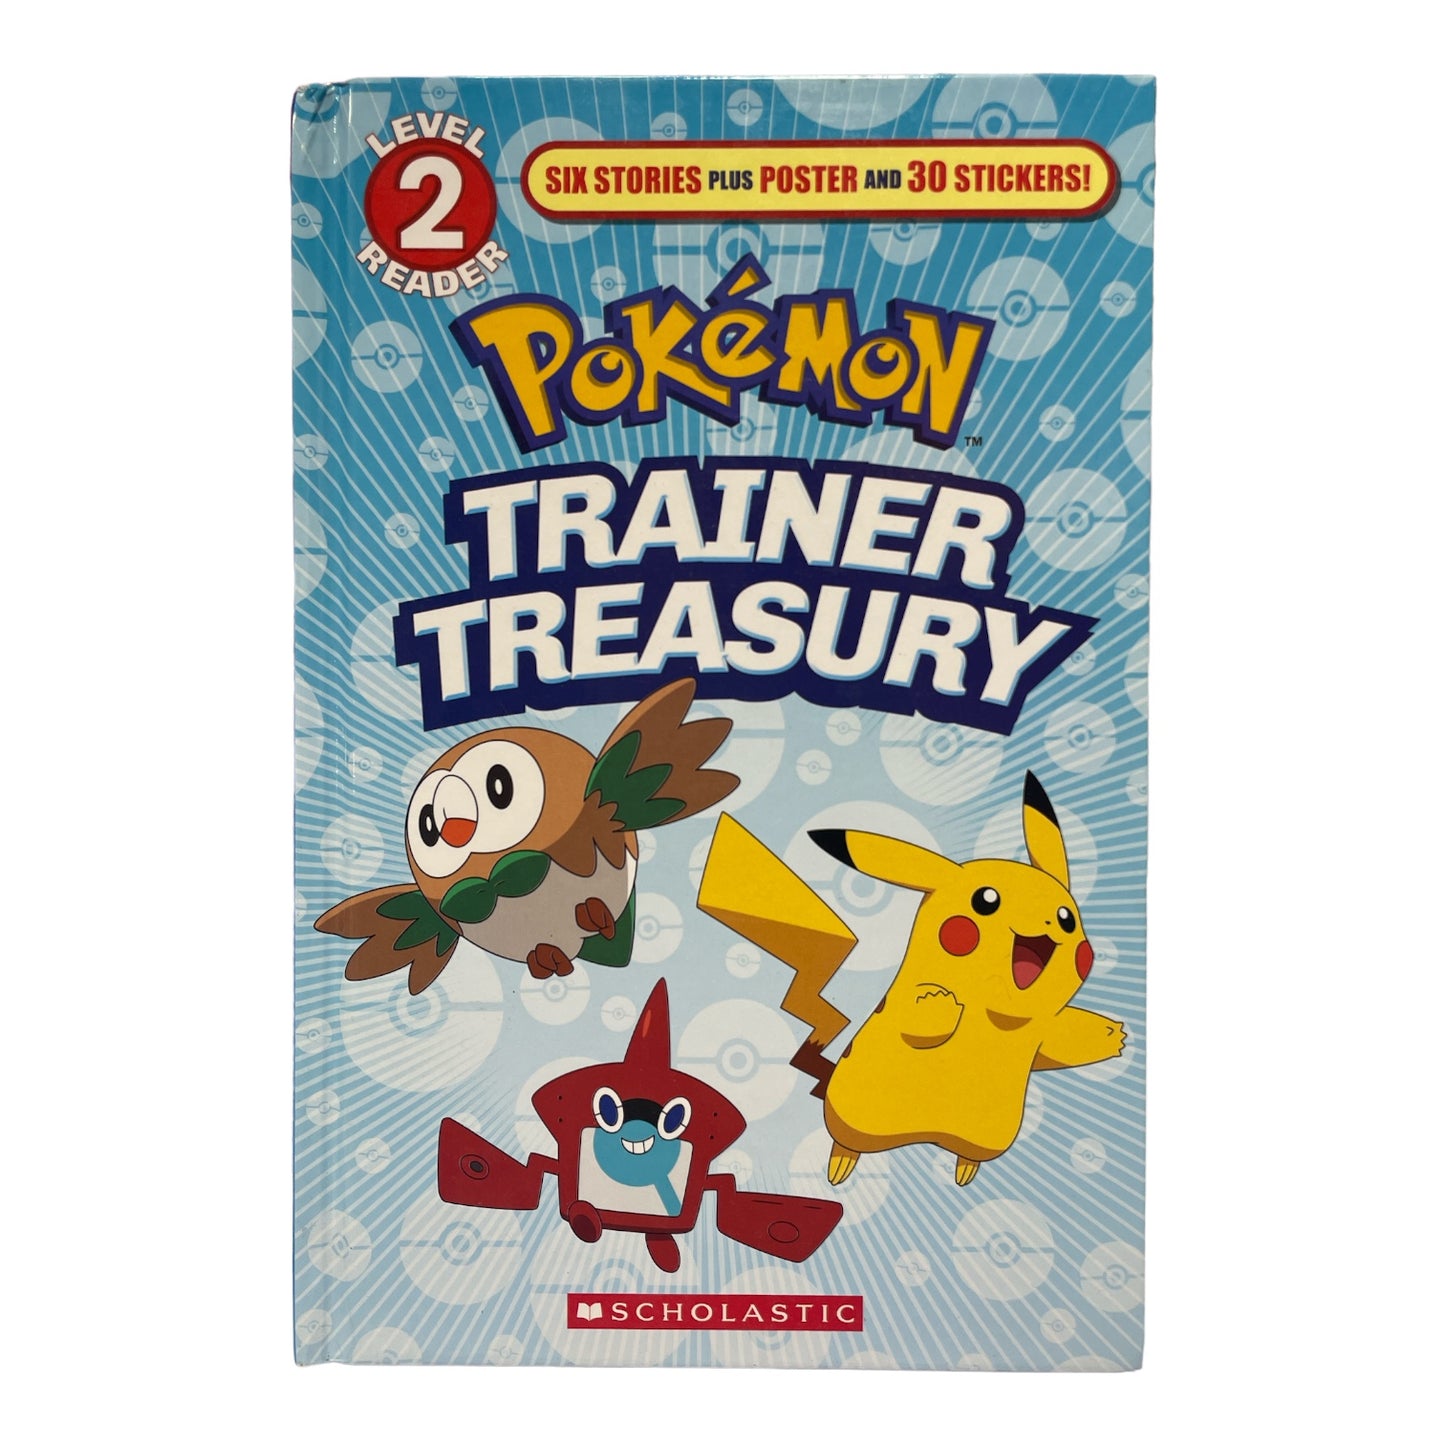 Pokemon Trainer Treasury, Level 2 Reader, 6 Stories, Poster & 30 Stickers!